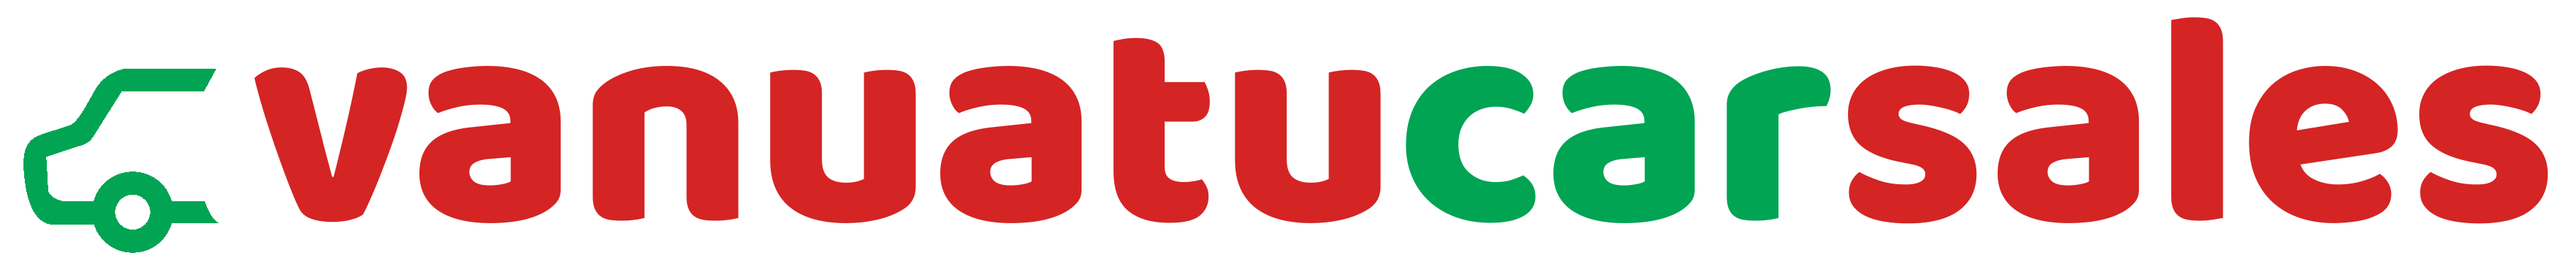 Vanuatucarsales logo